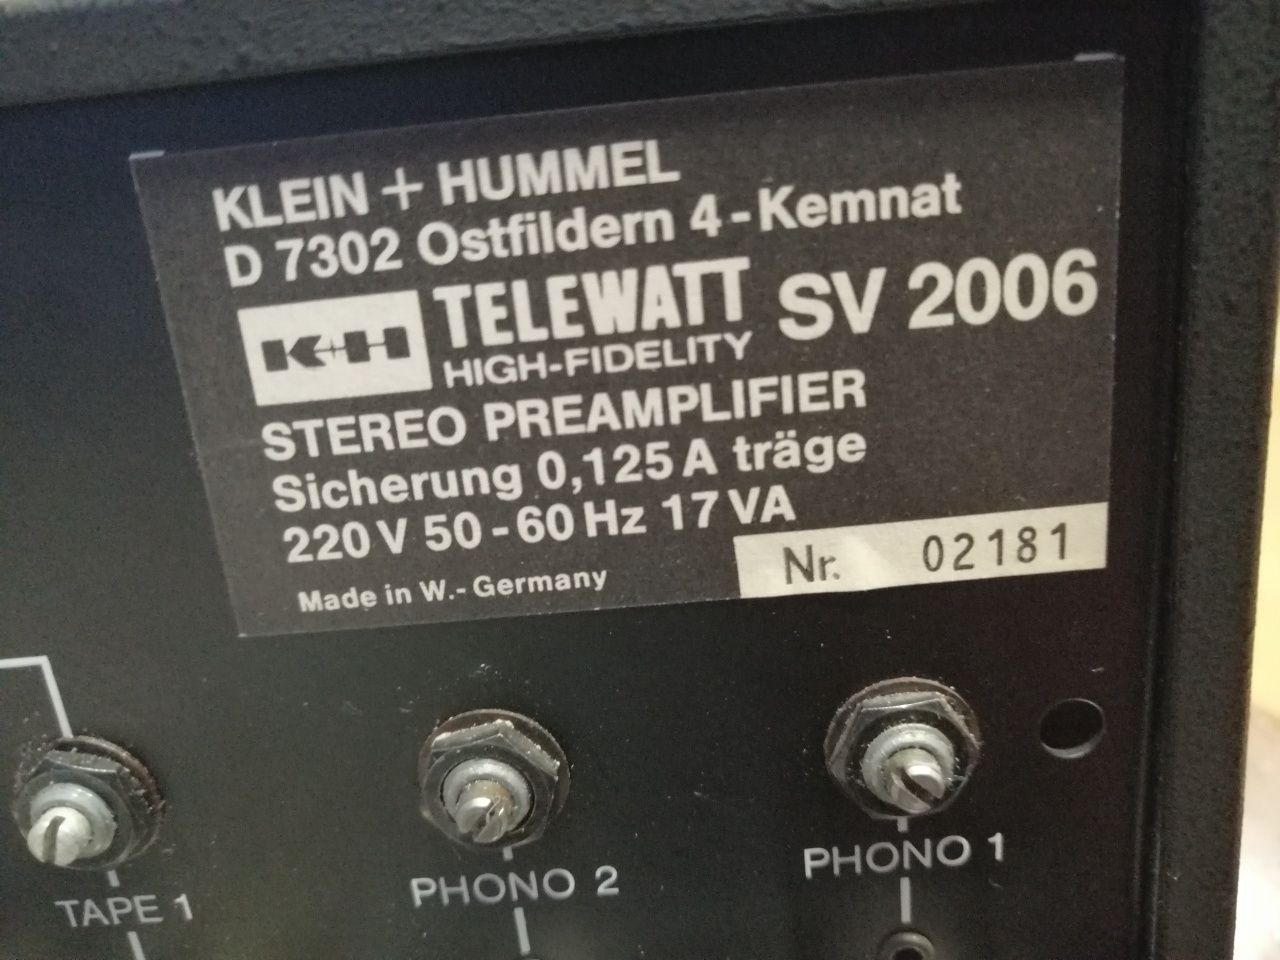 Klein&hummel telewatt sv 2006 (Profissional)